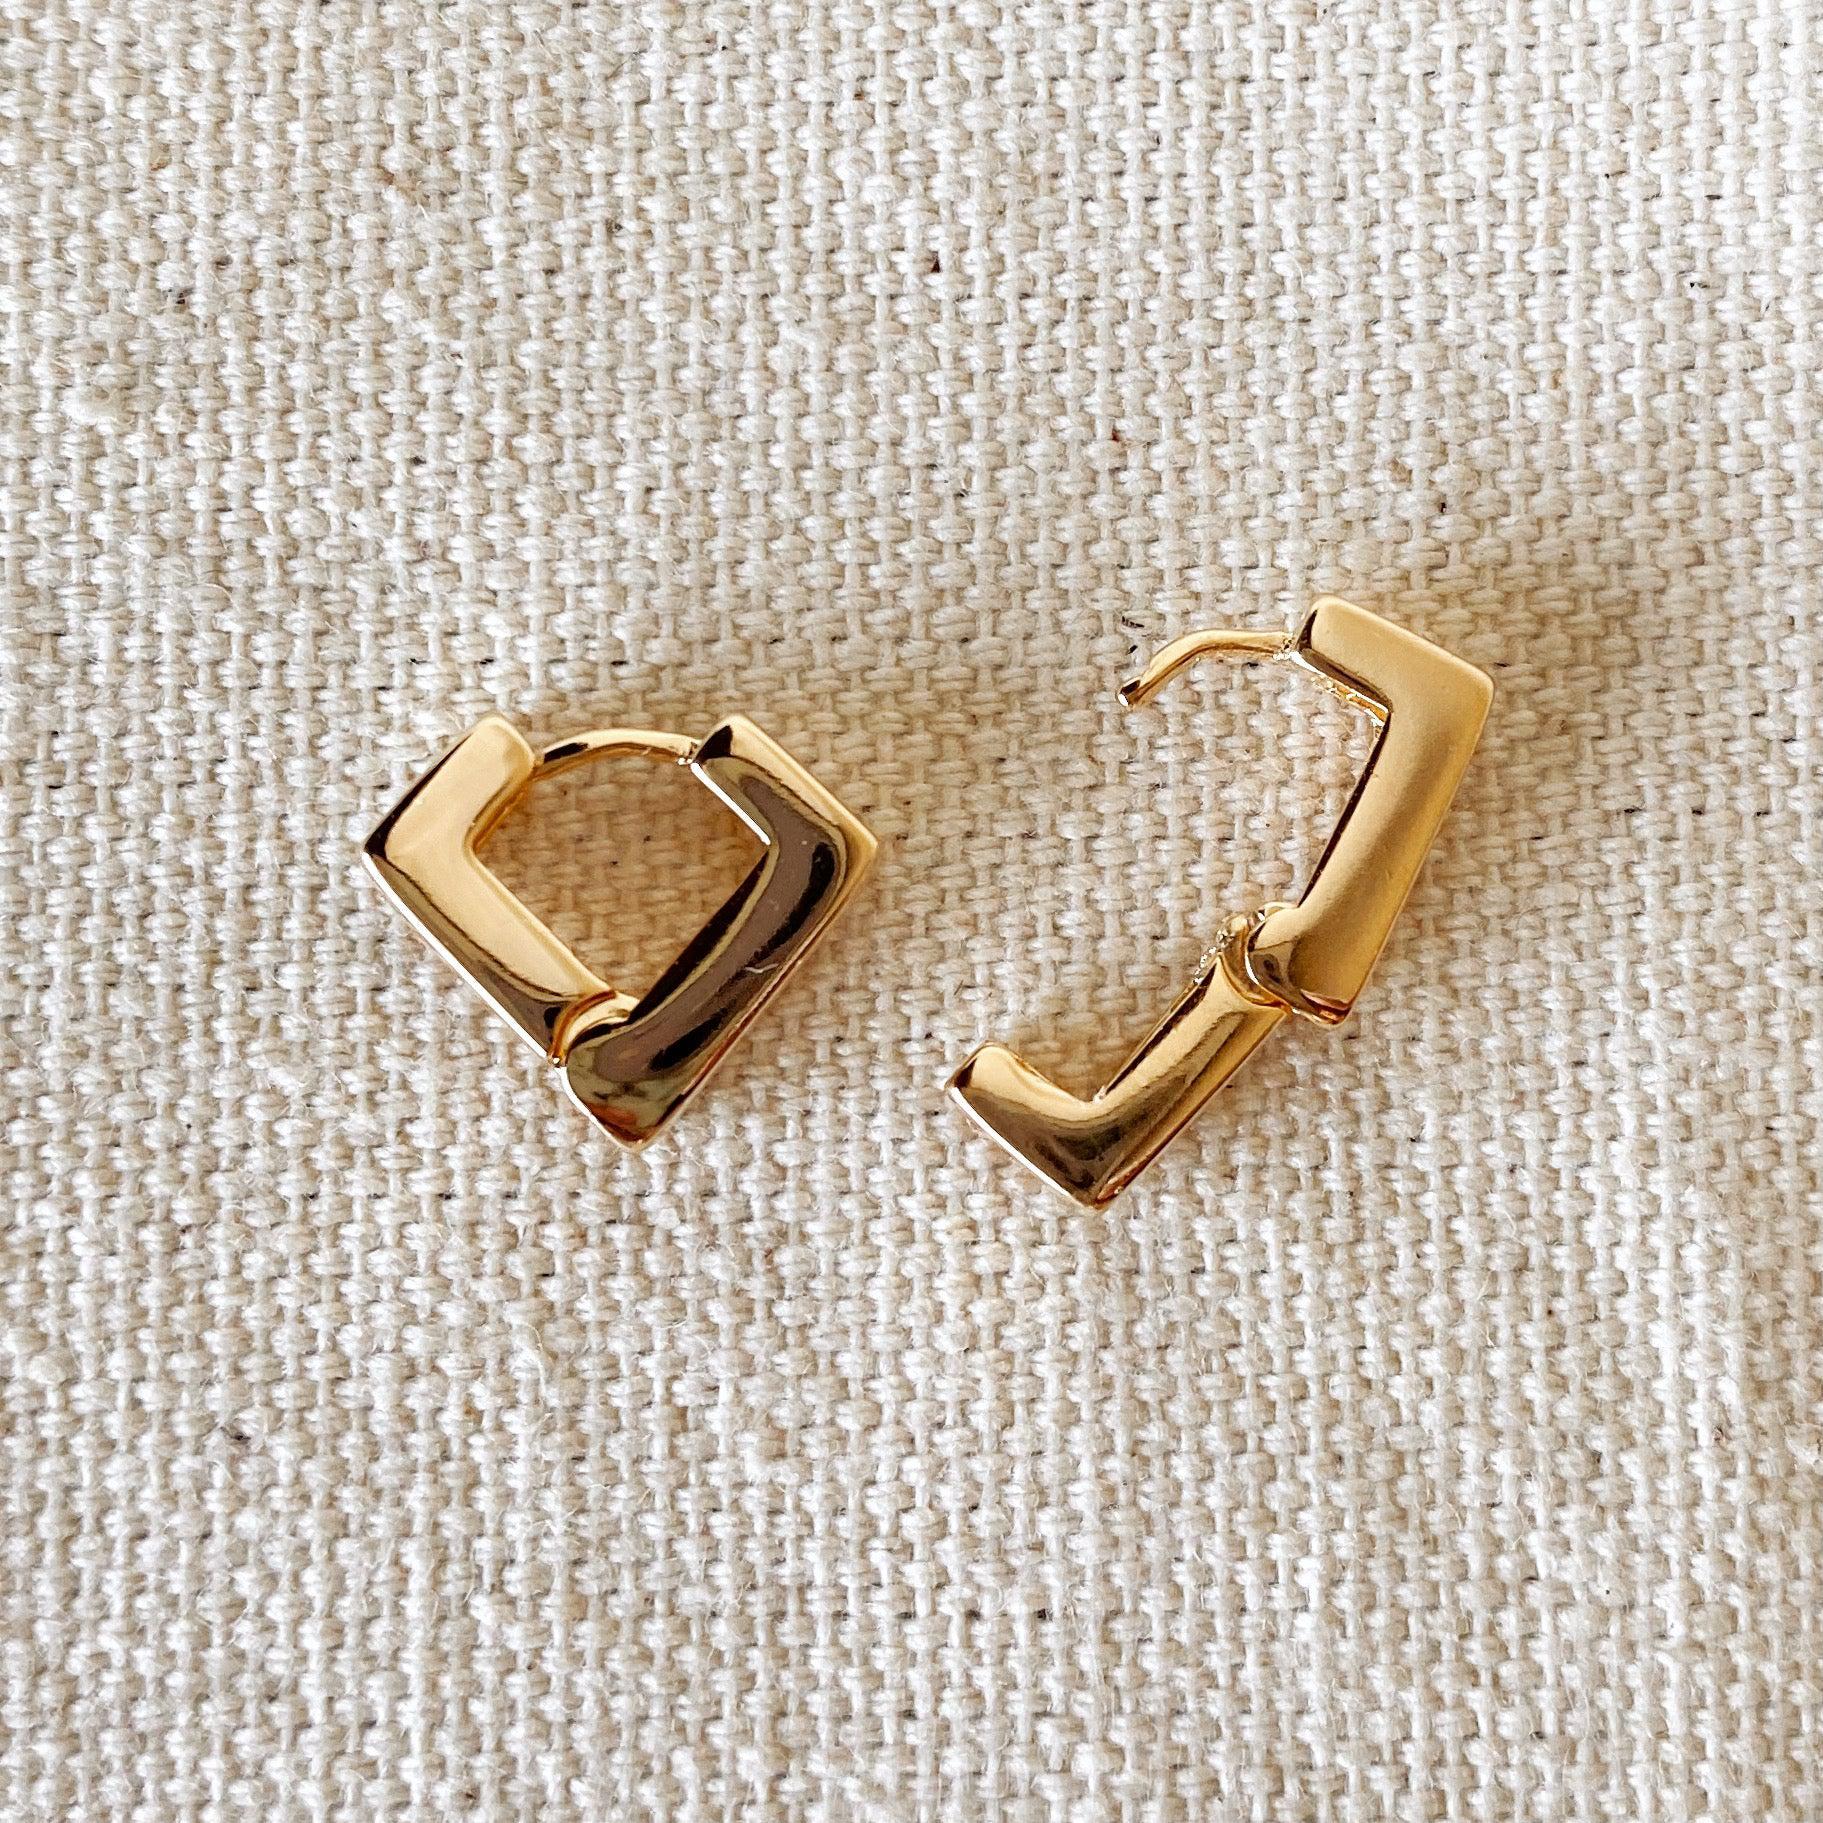 GoldFi 18k Gold Filled Diamond Shaped Clicker Earrings